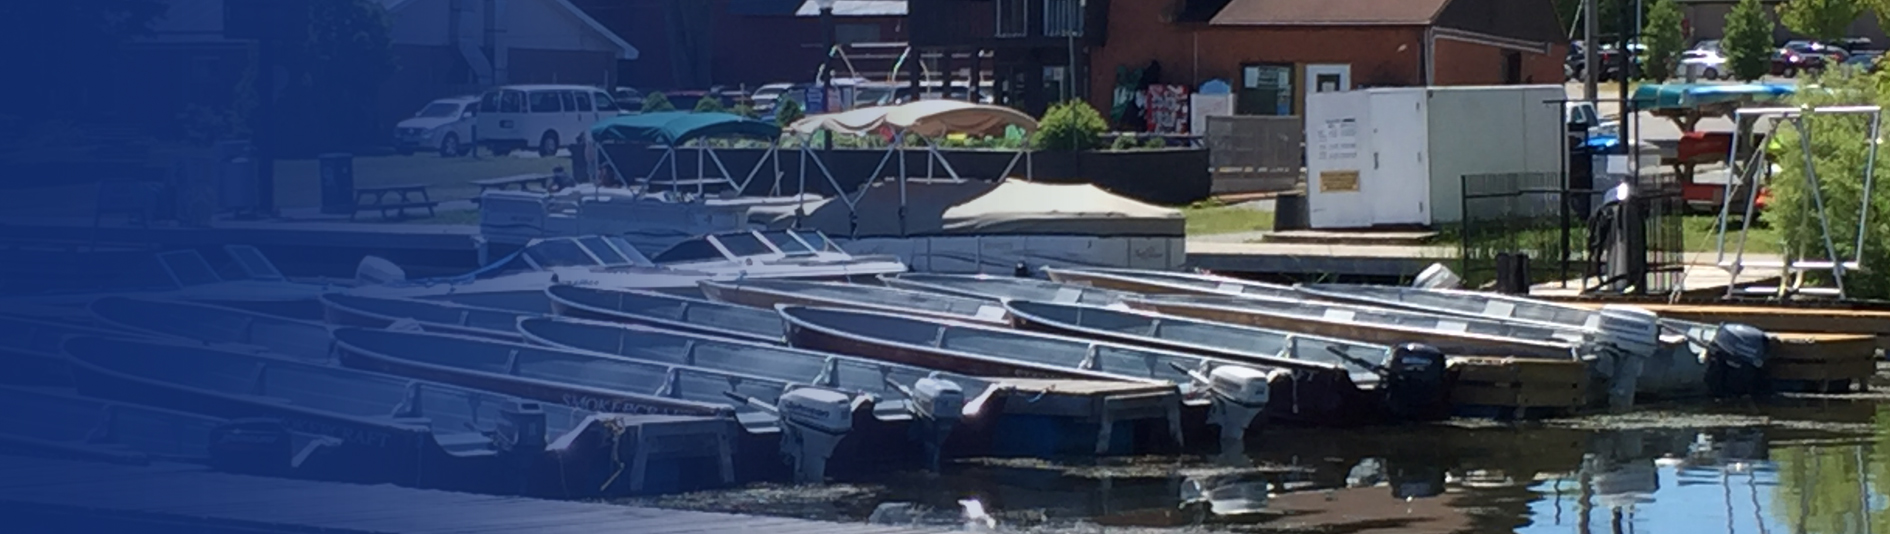 Boat Rentals near Toronto